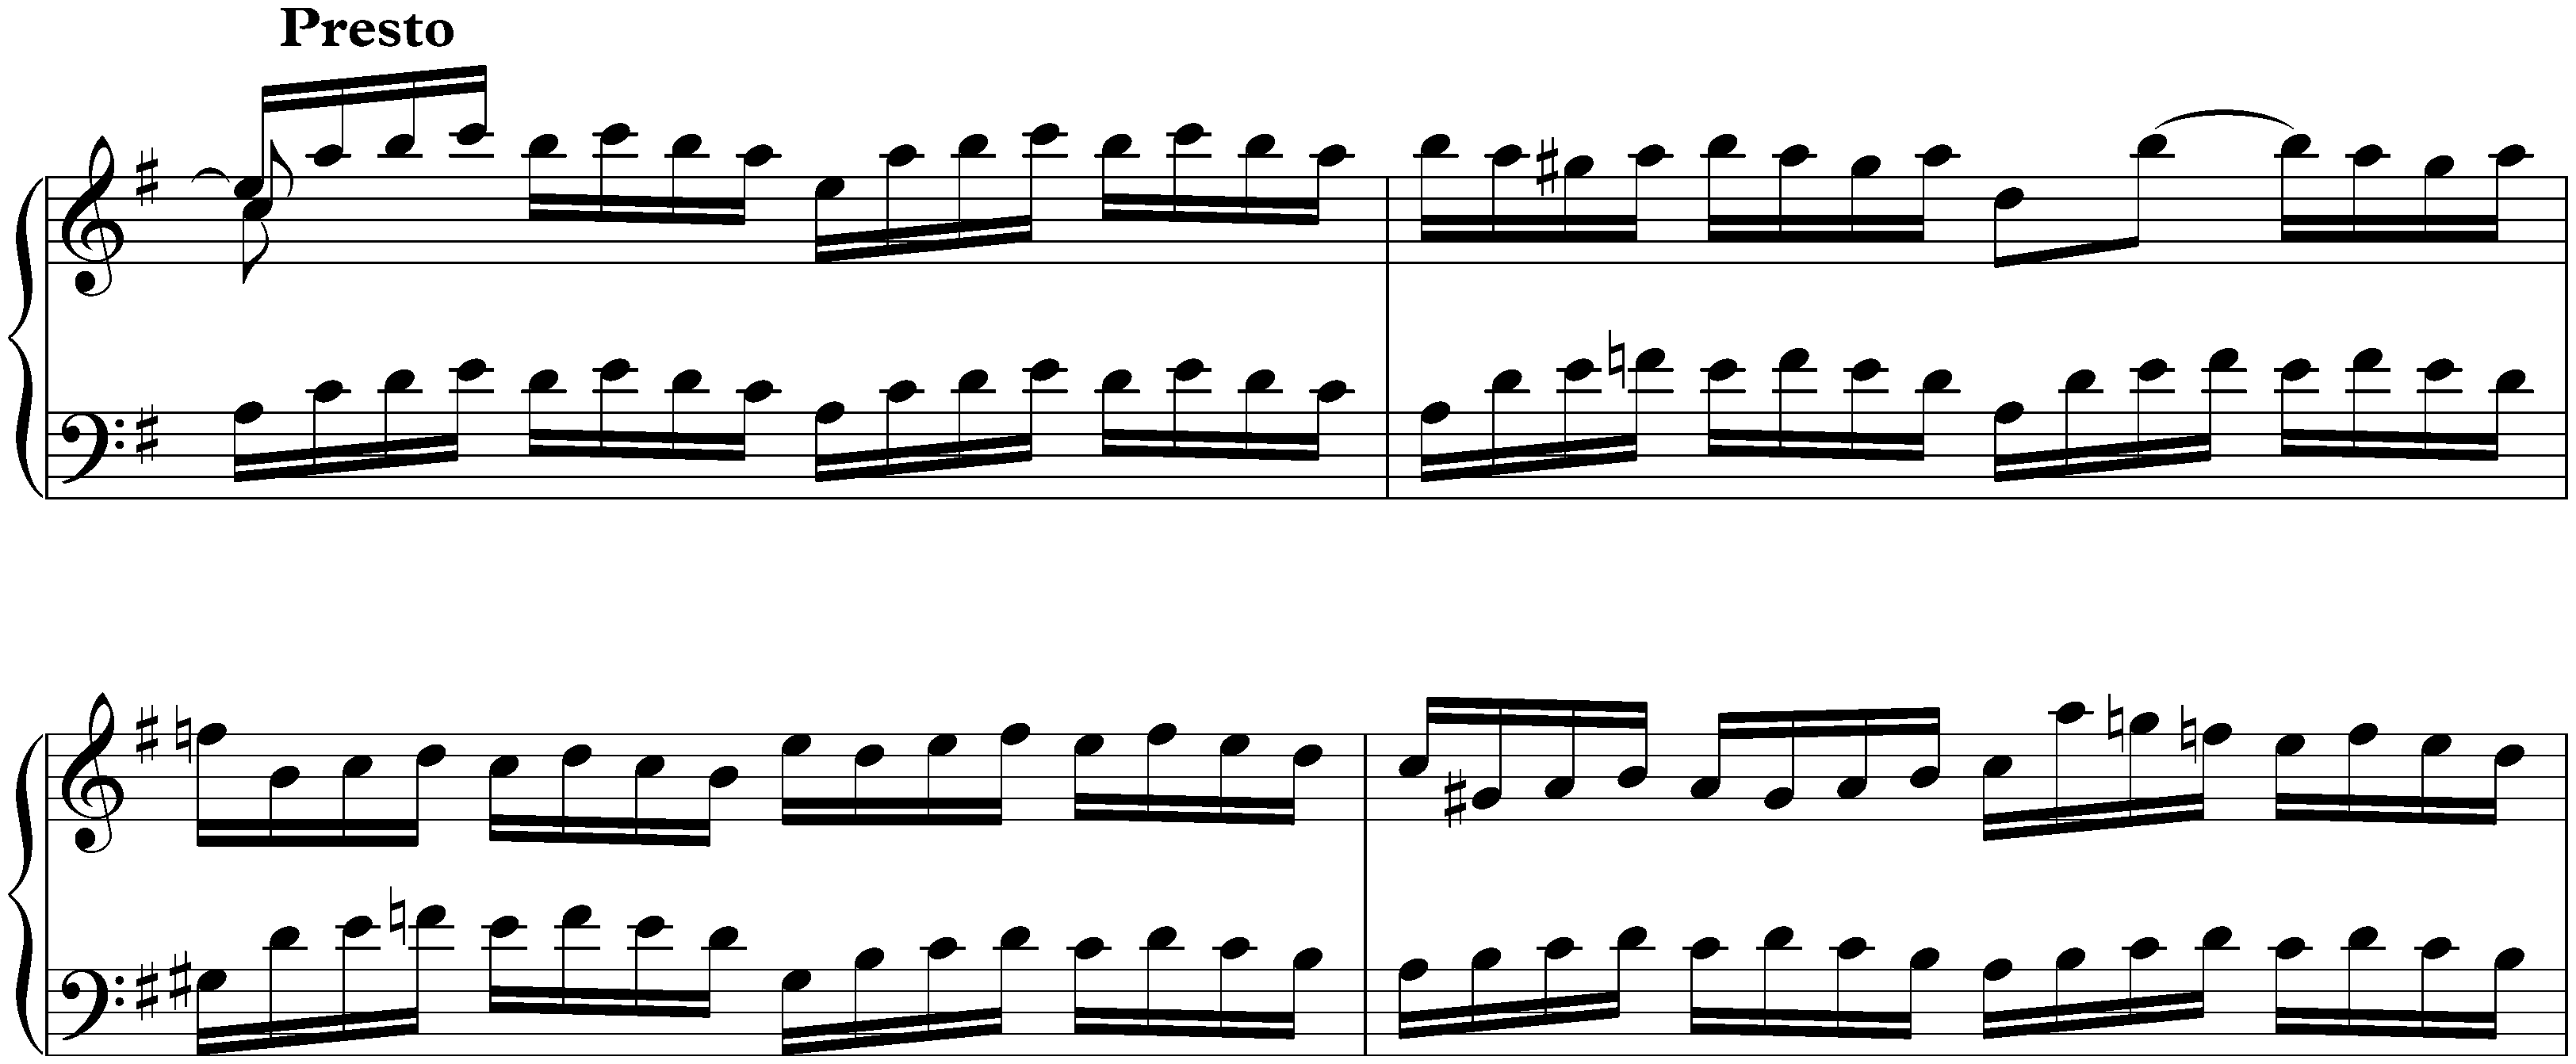 The Well-Tempered Clavier, Book 1, BWV 846–869; 10. E minor, BWV 855, Prelude